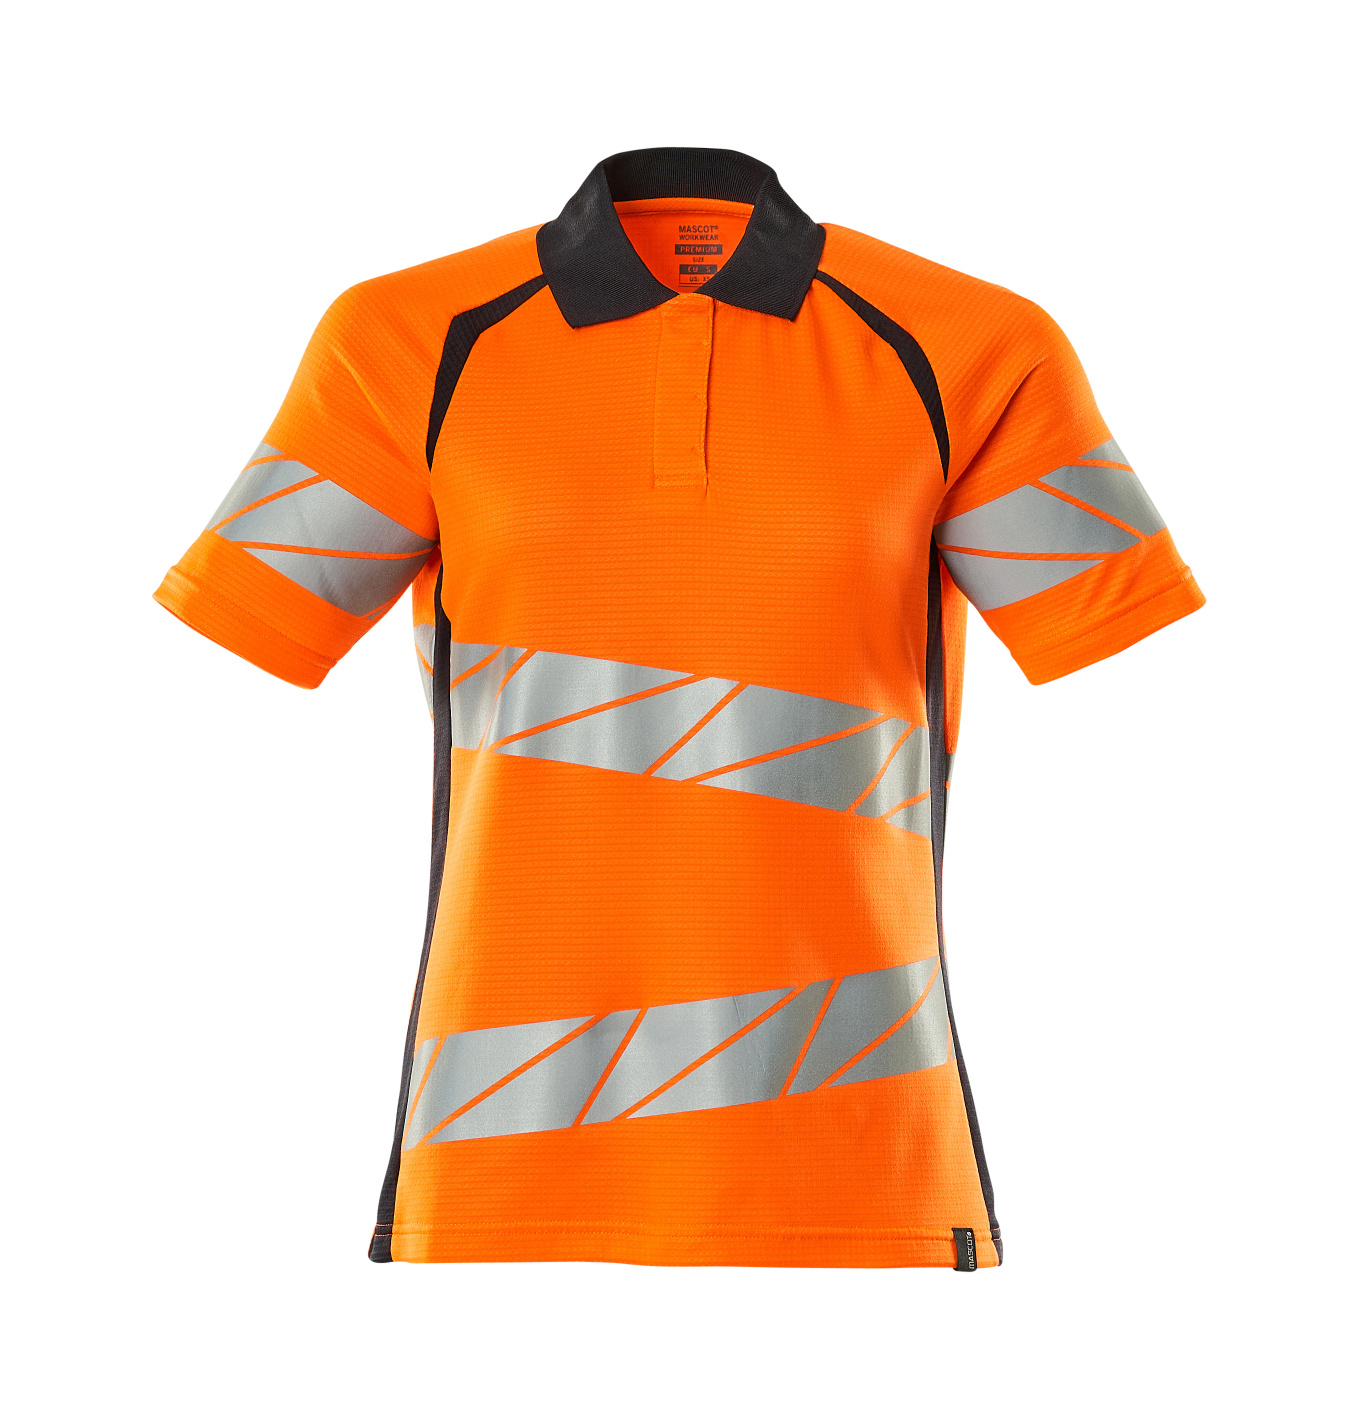 MASCOT Accelerate Safe Polo-Shirt Nr. 19093-771-14010